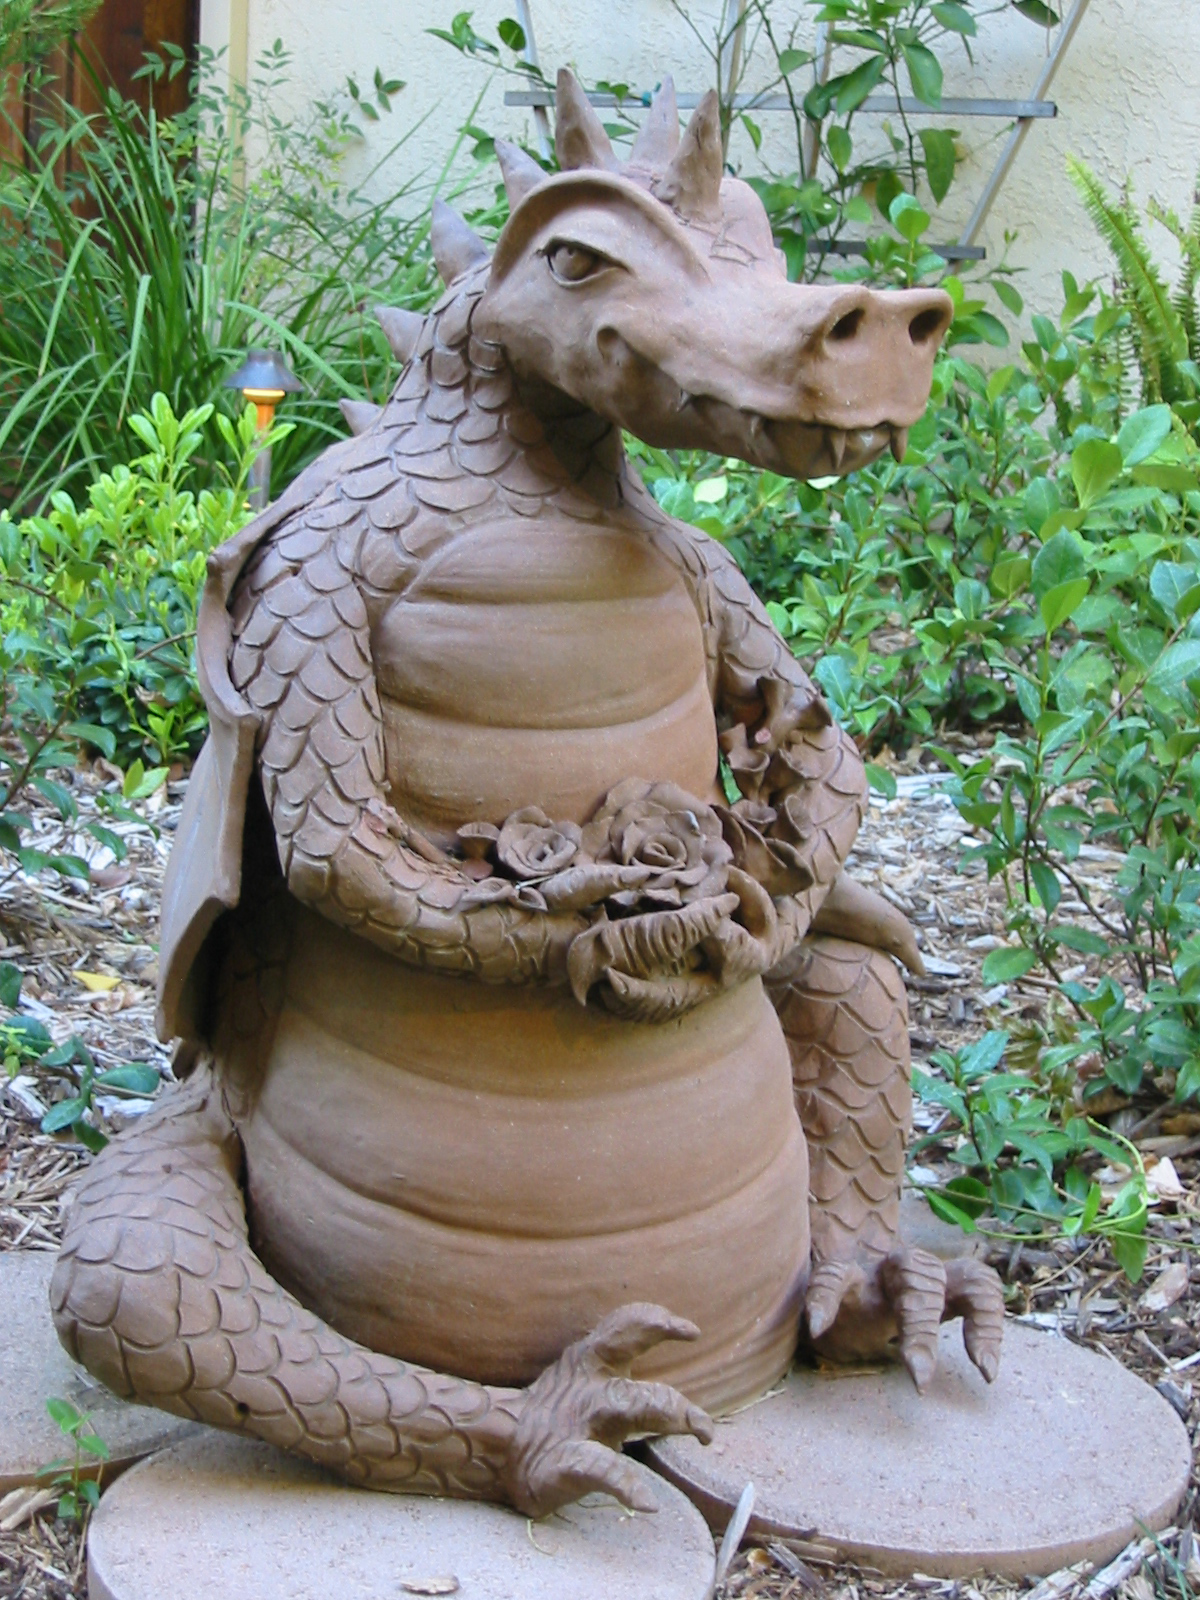 Garden Sculpture of Friendly Dragon Holding Flowers